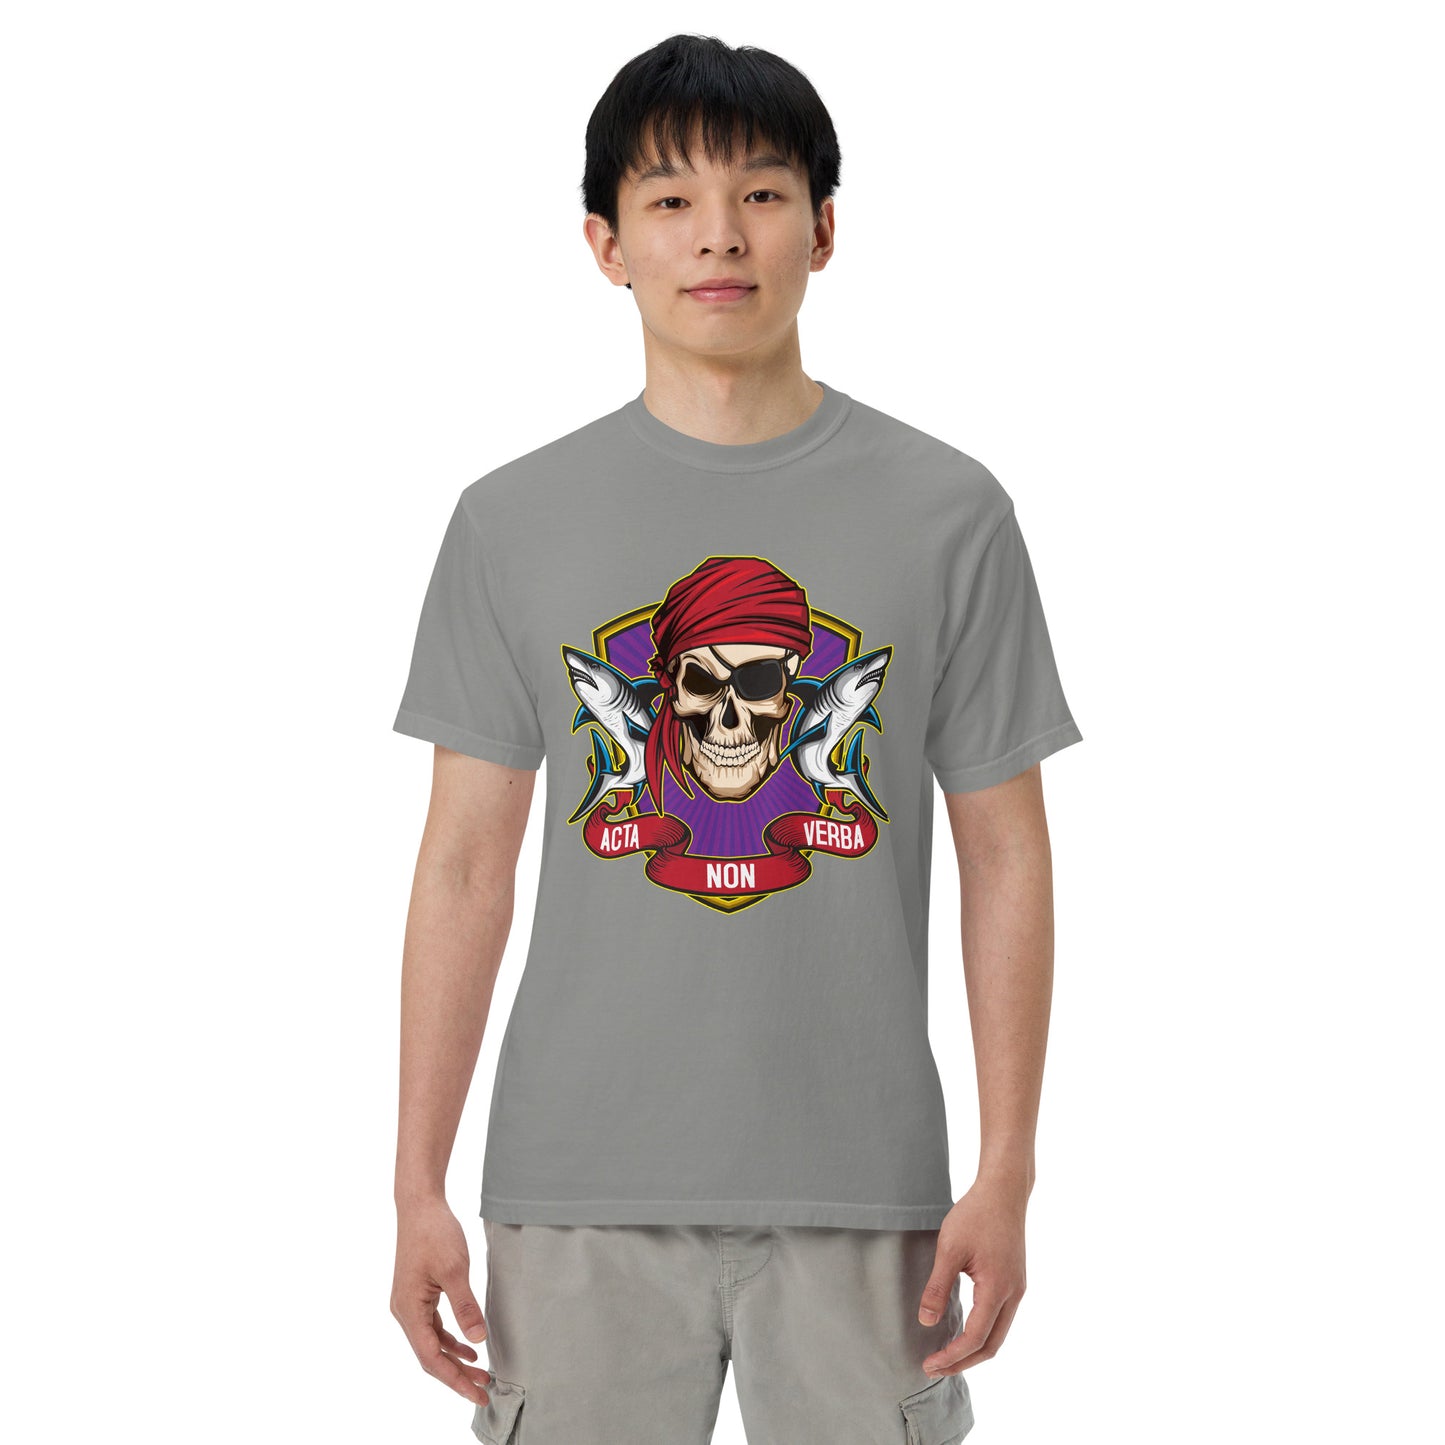 ANV Men’s Garment-Dyed Heavyweight T-Shirt - Classic Edition